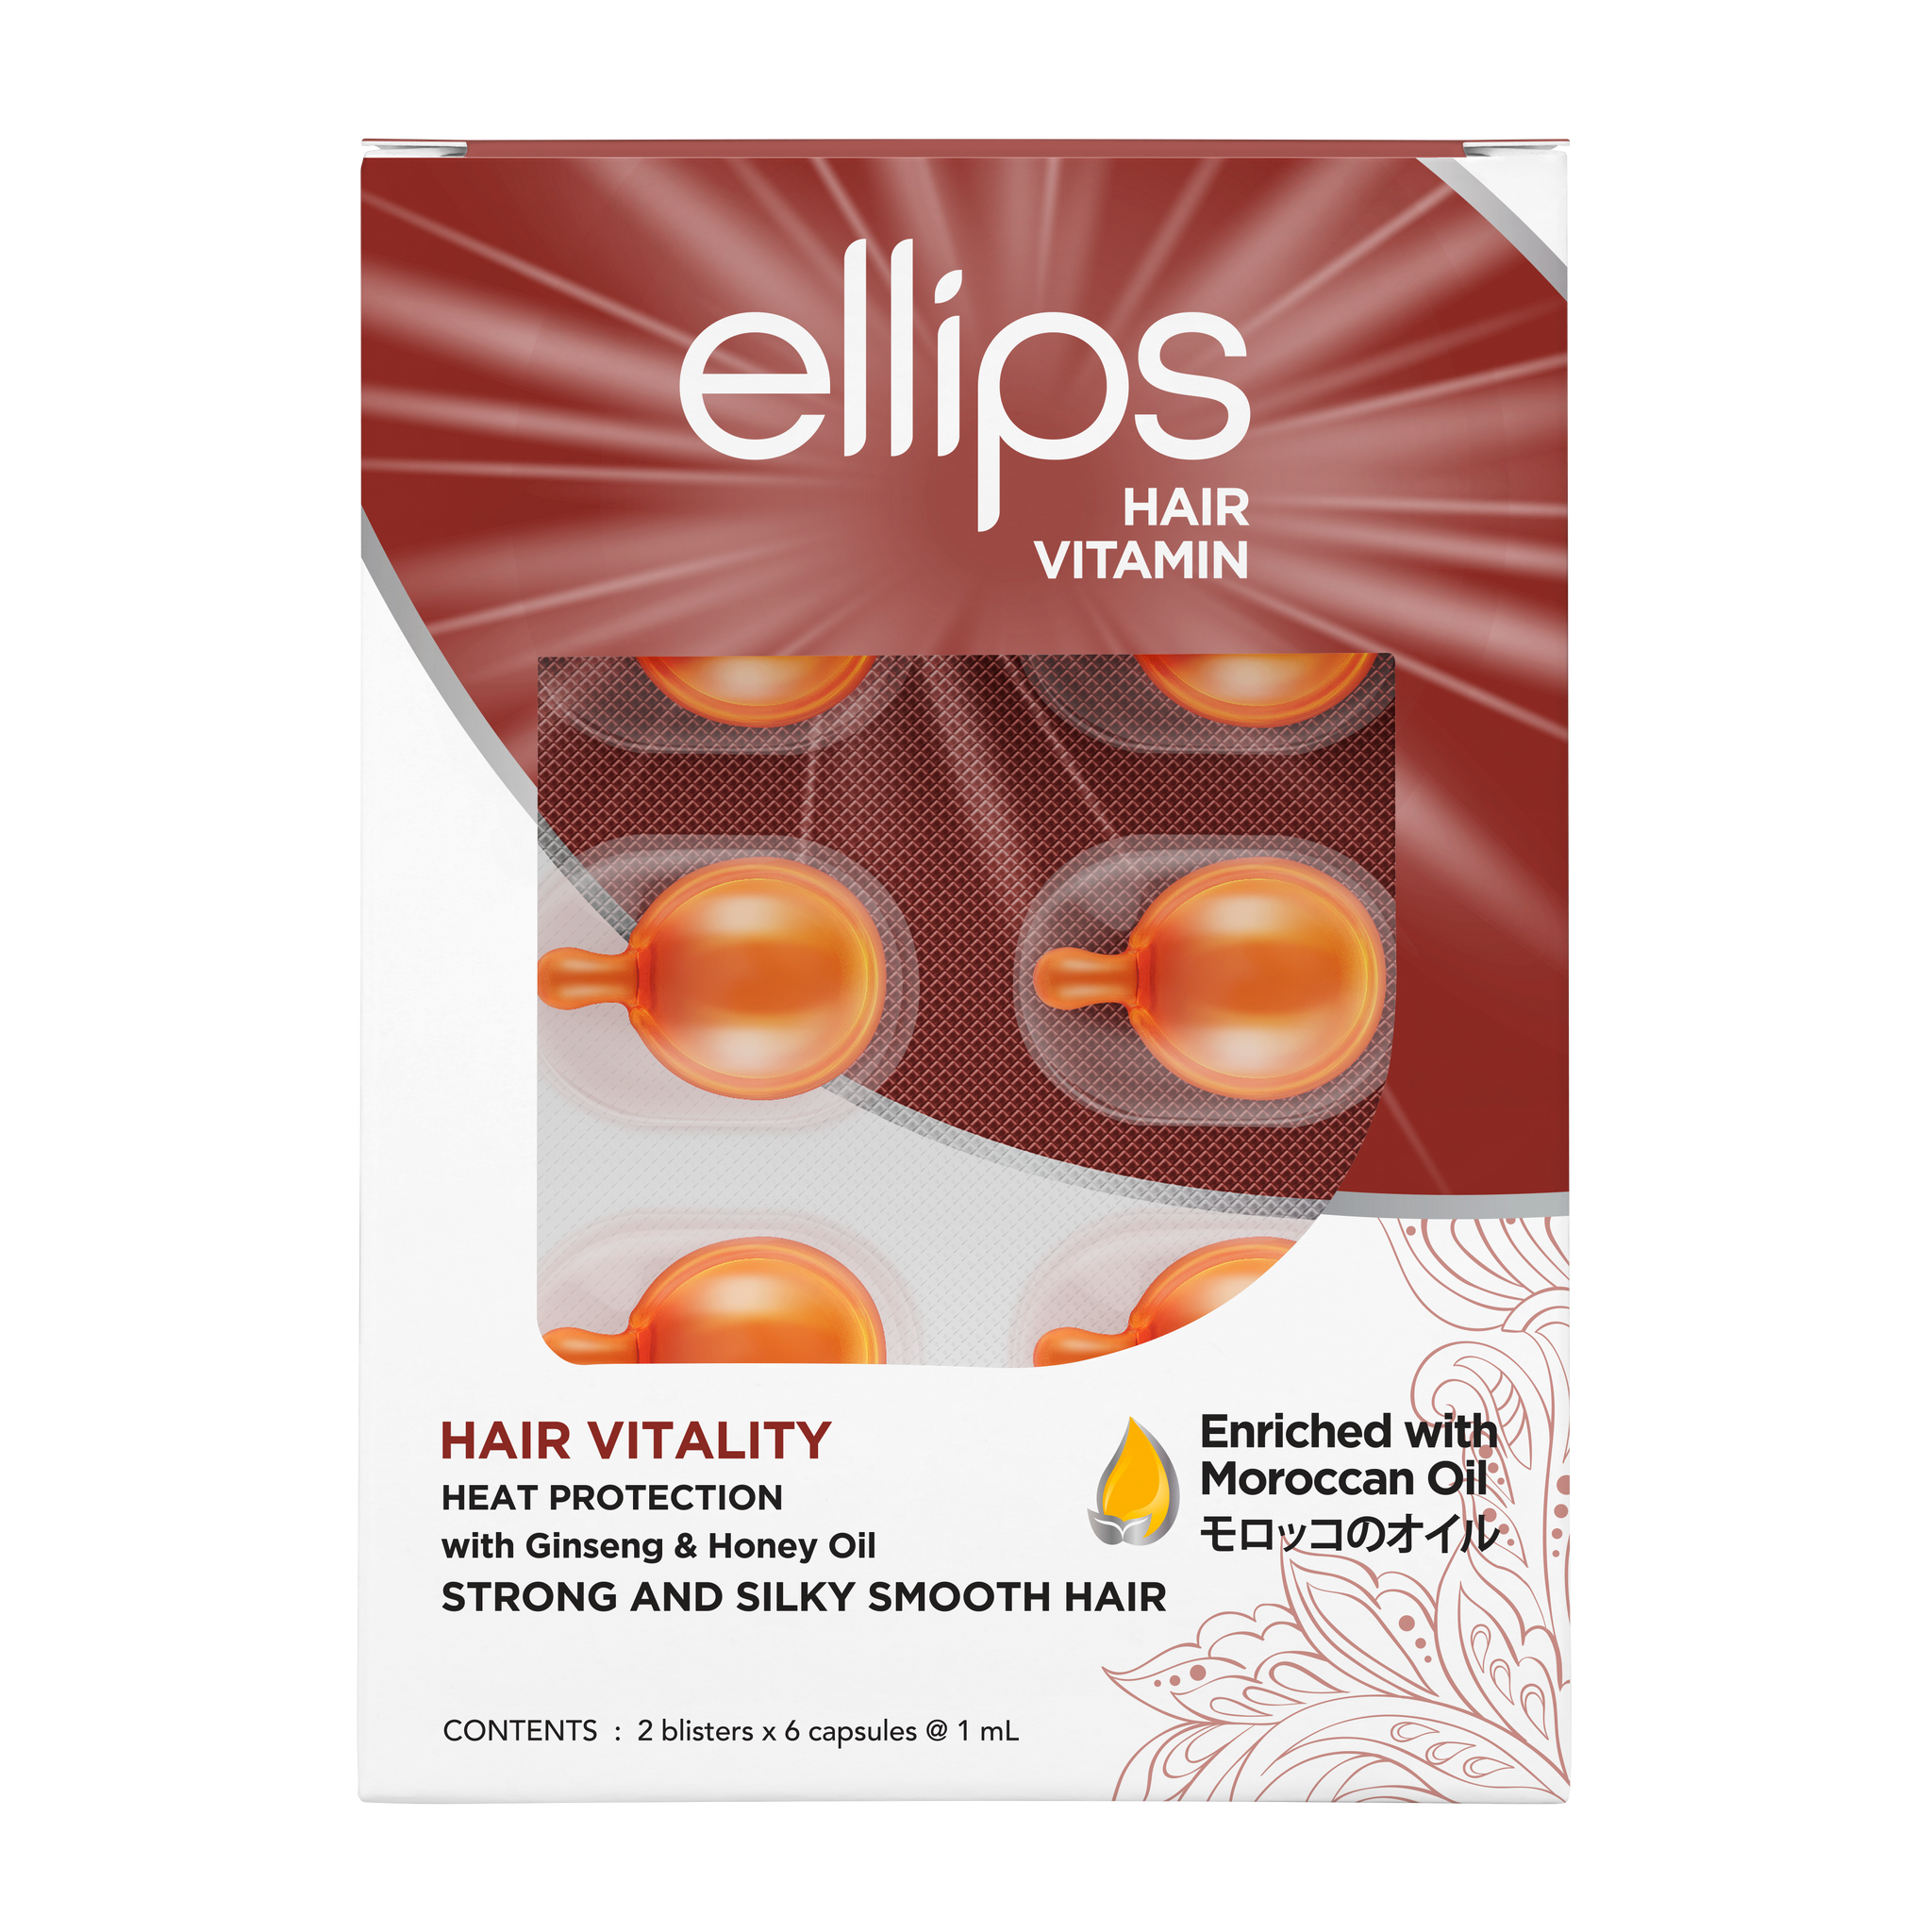 ellips Orange Hair Vitality - Boite de 12 capsules